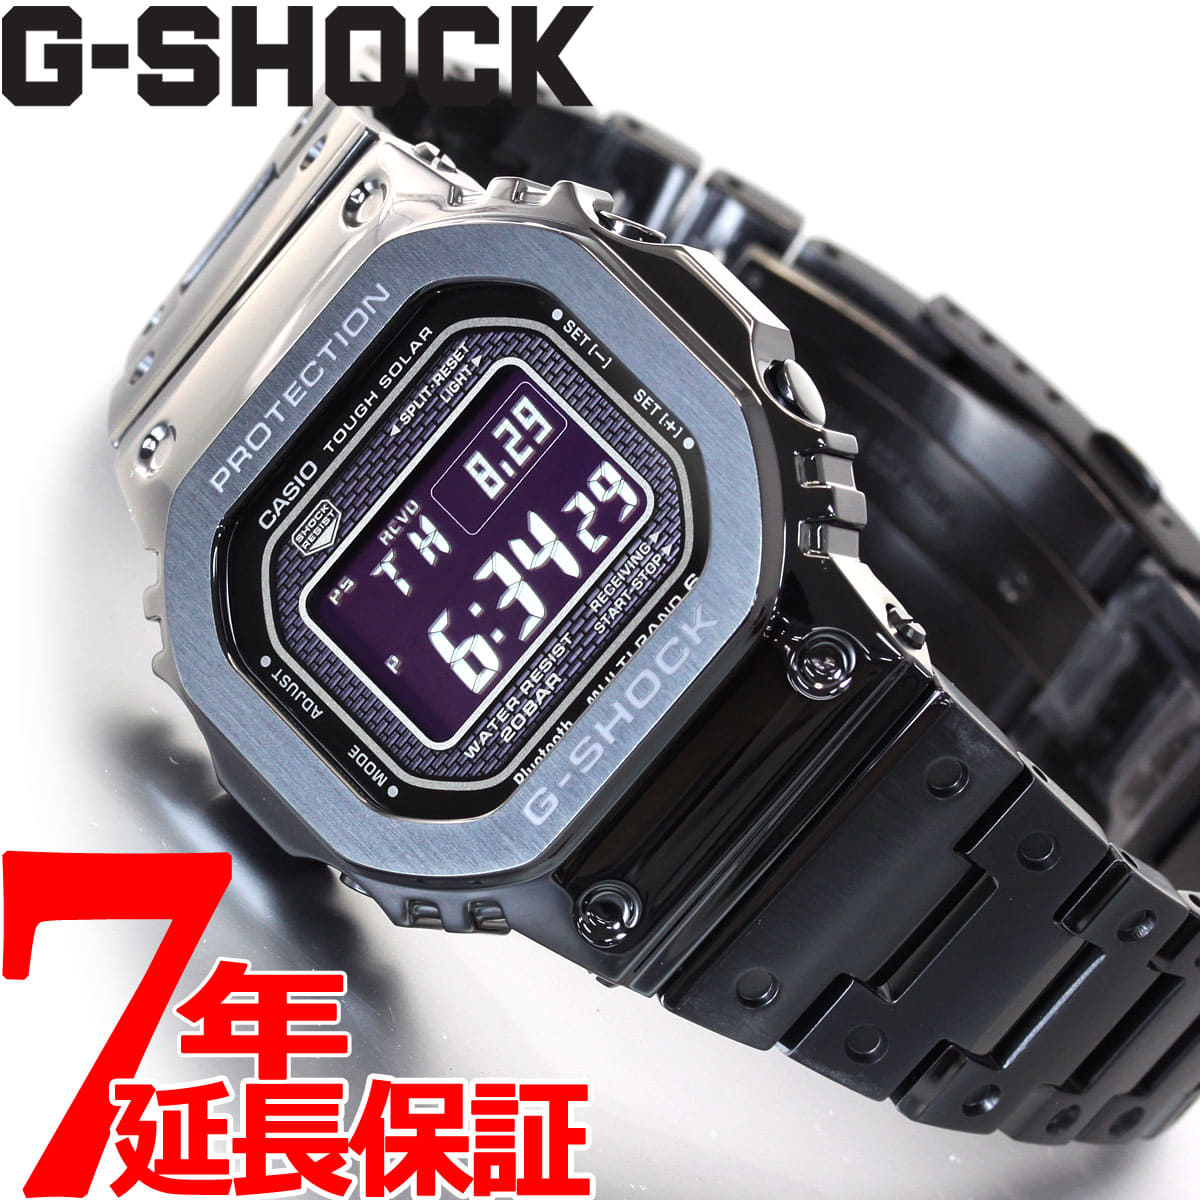 New]up to 37 times! Casio G-Shock CASIO G-SHOCK tough solar radio